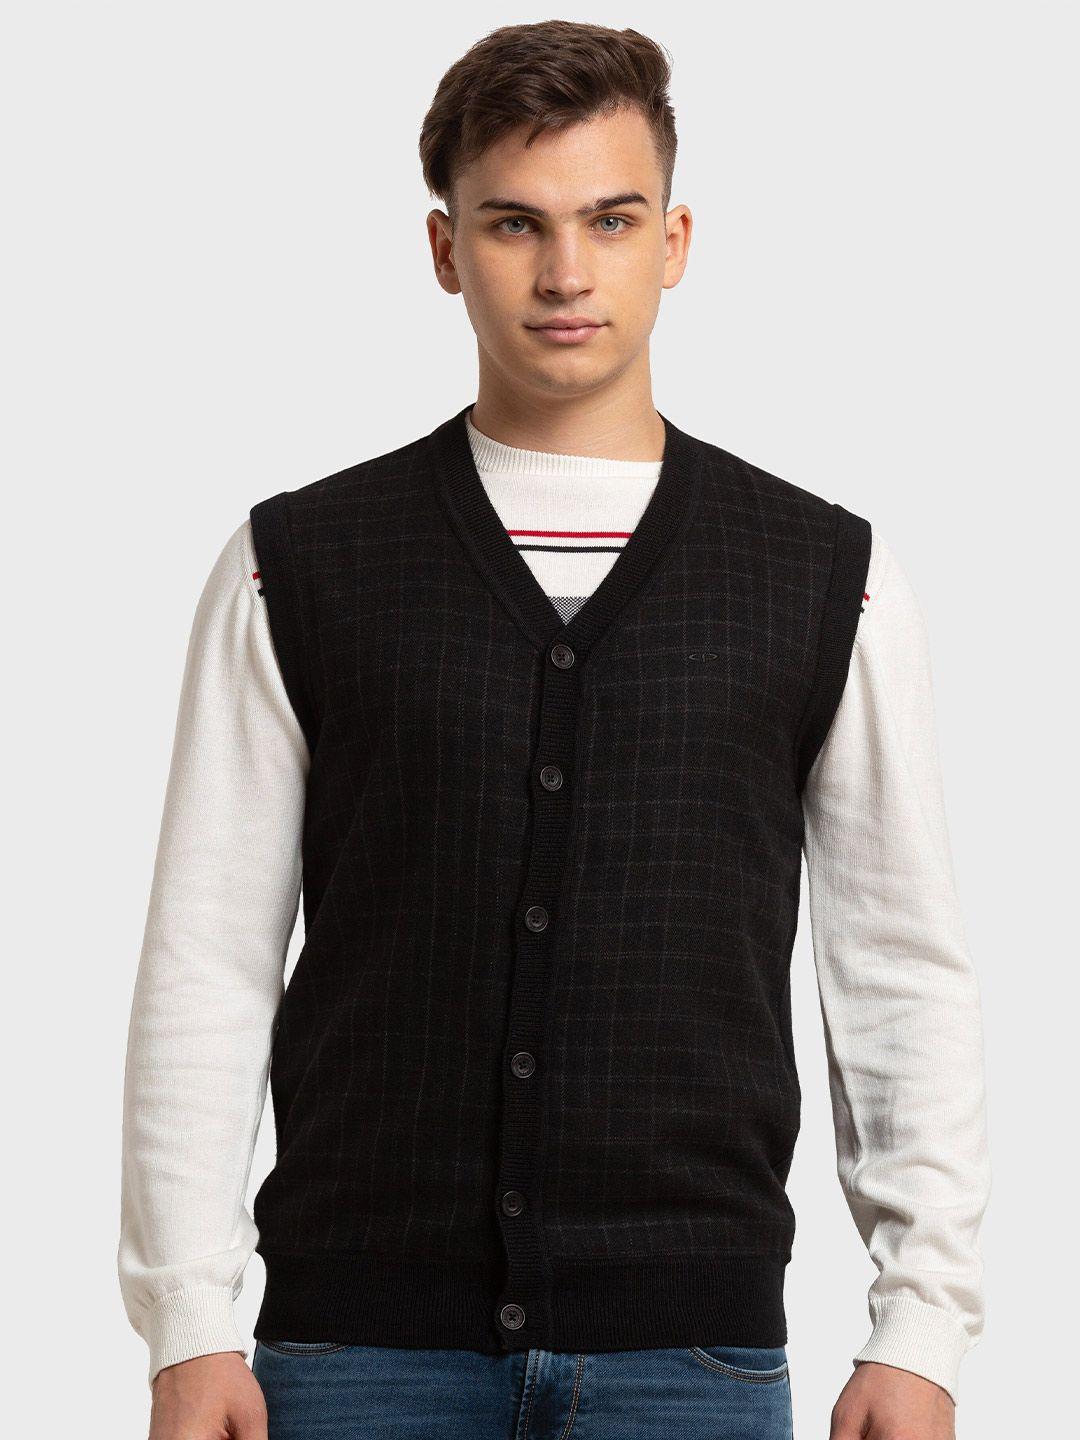 colorplus checked sleeveless v-neck cardigan sweater